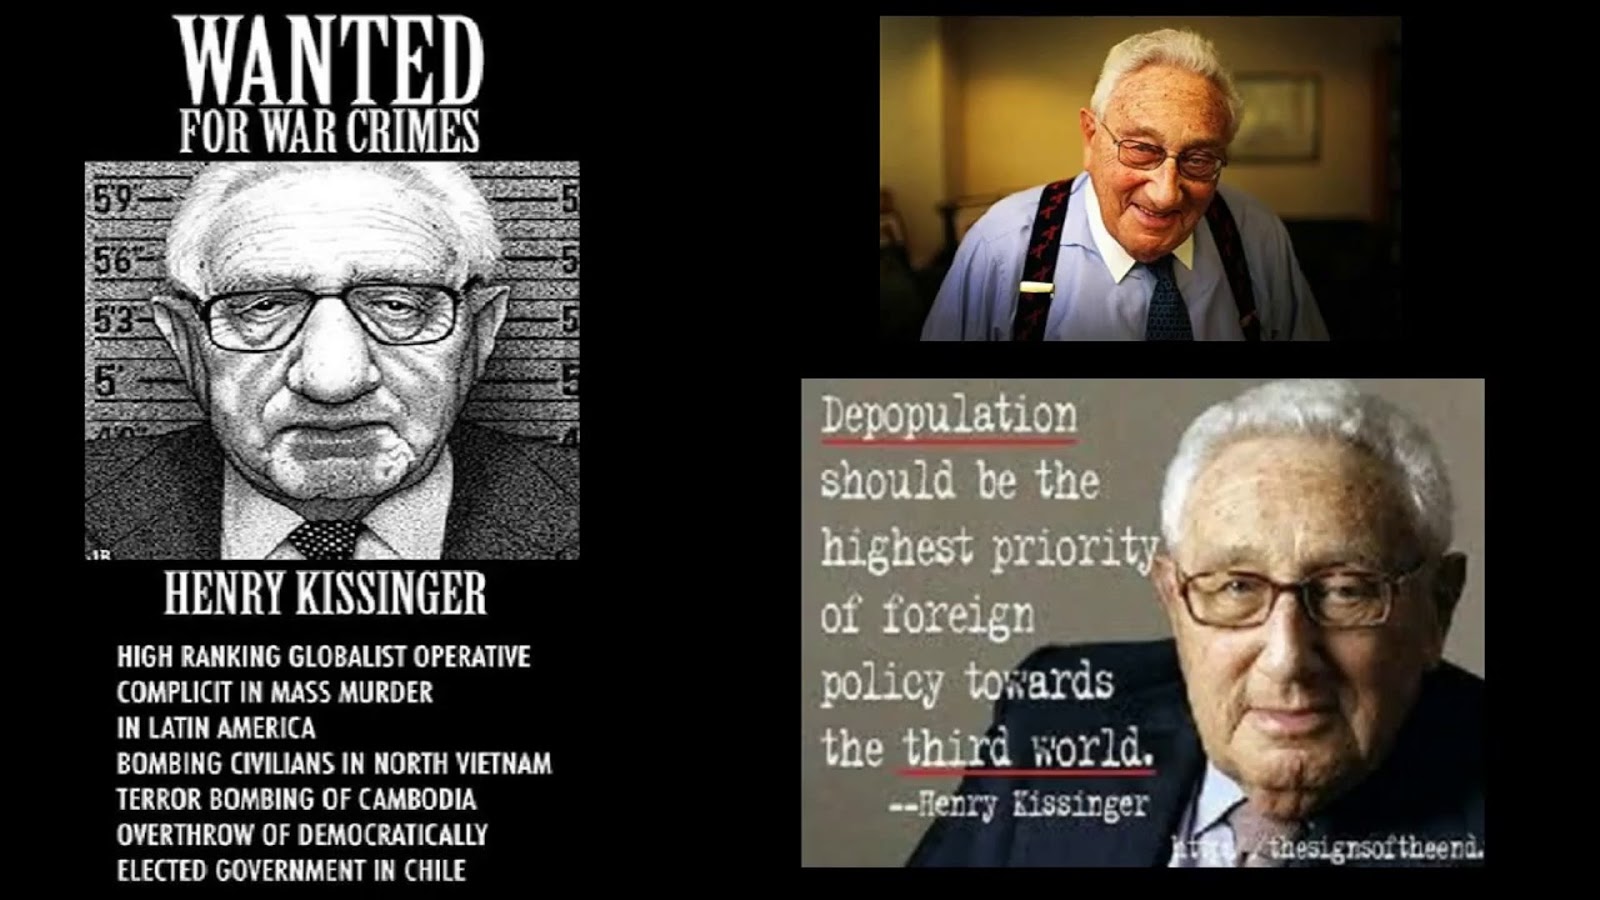 Kissinger252c2beugenics2band2bdepopulation.jpg